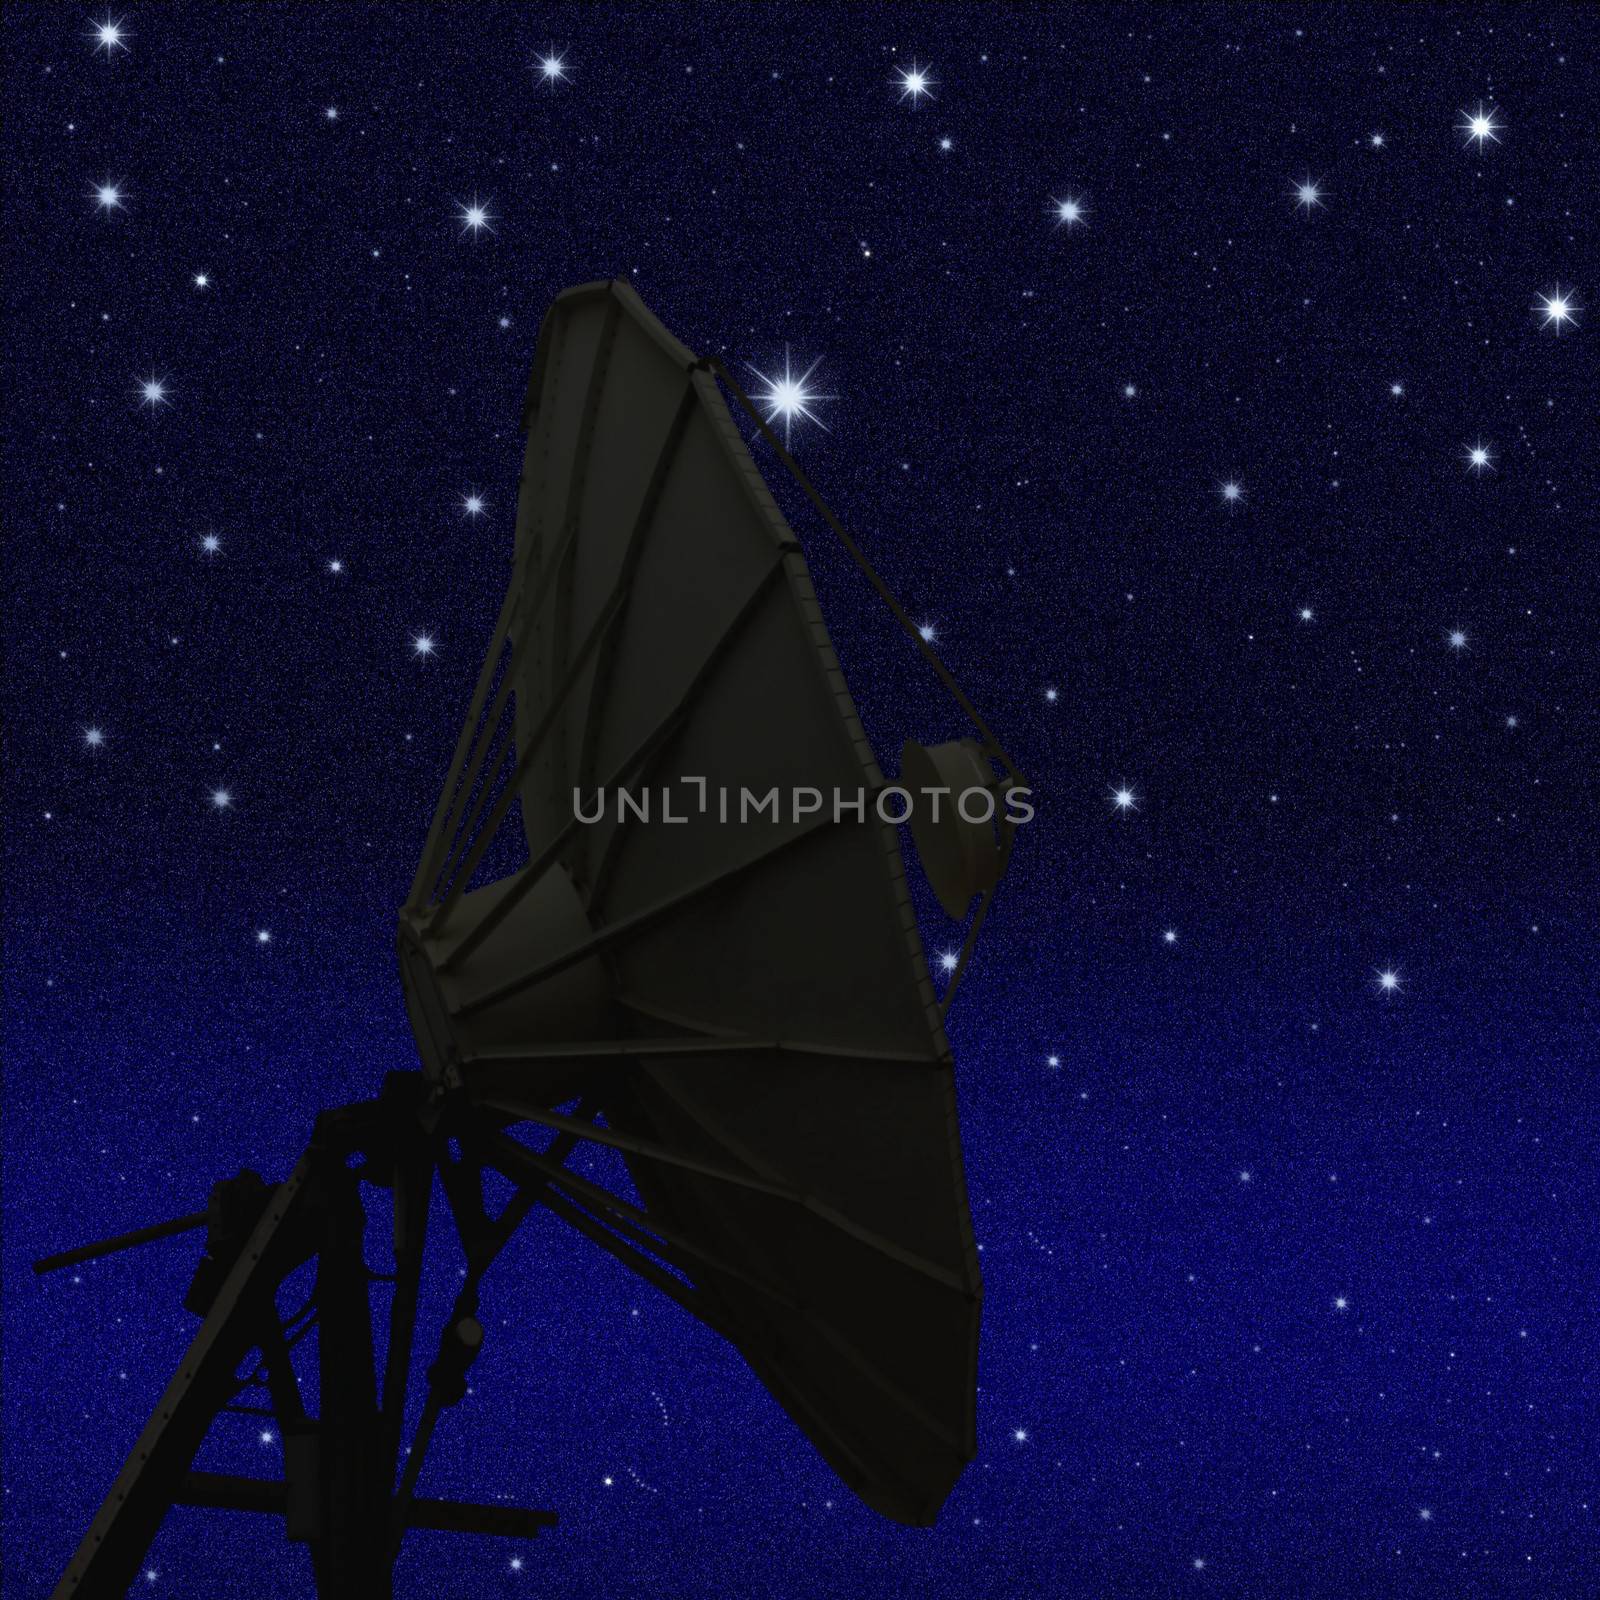 Satellite dish at night starry sky background